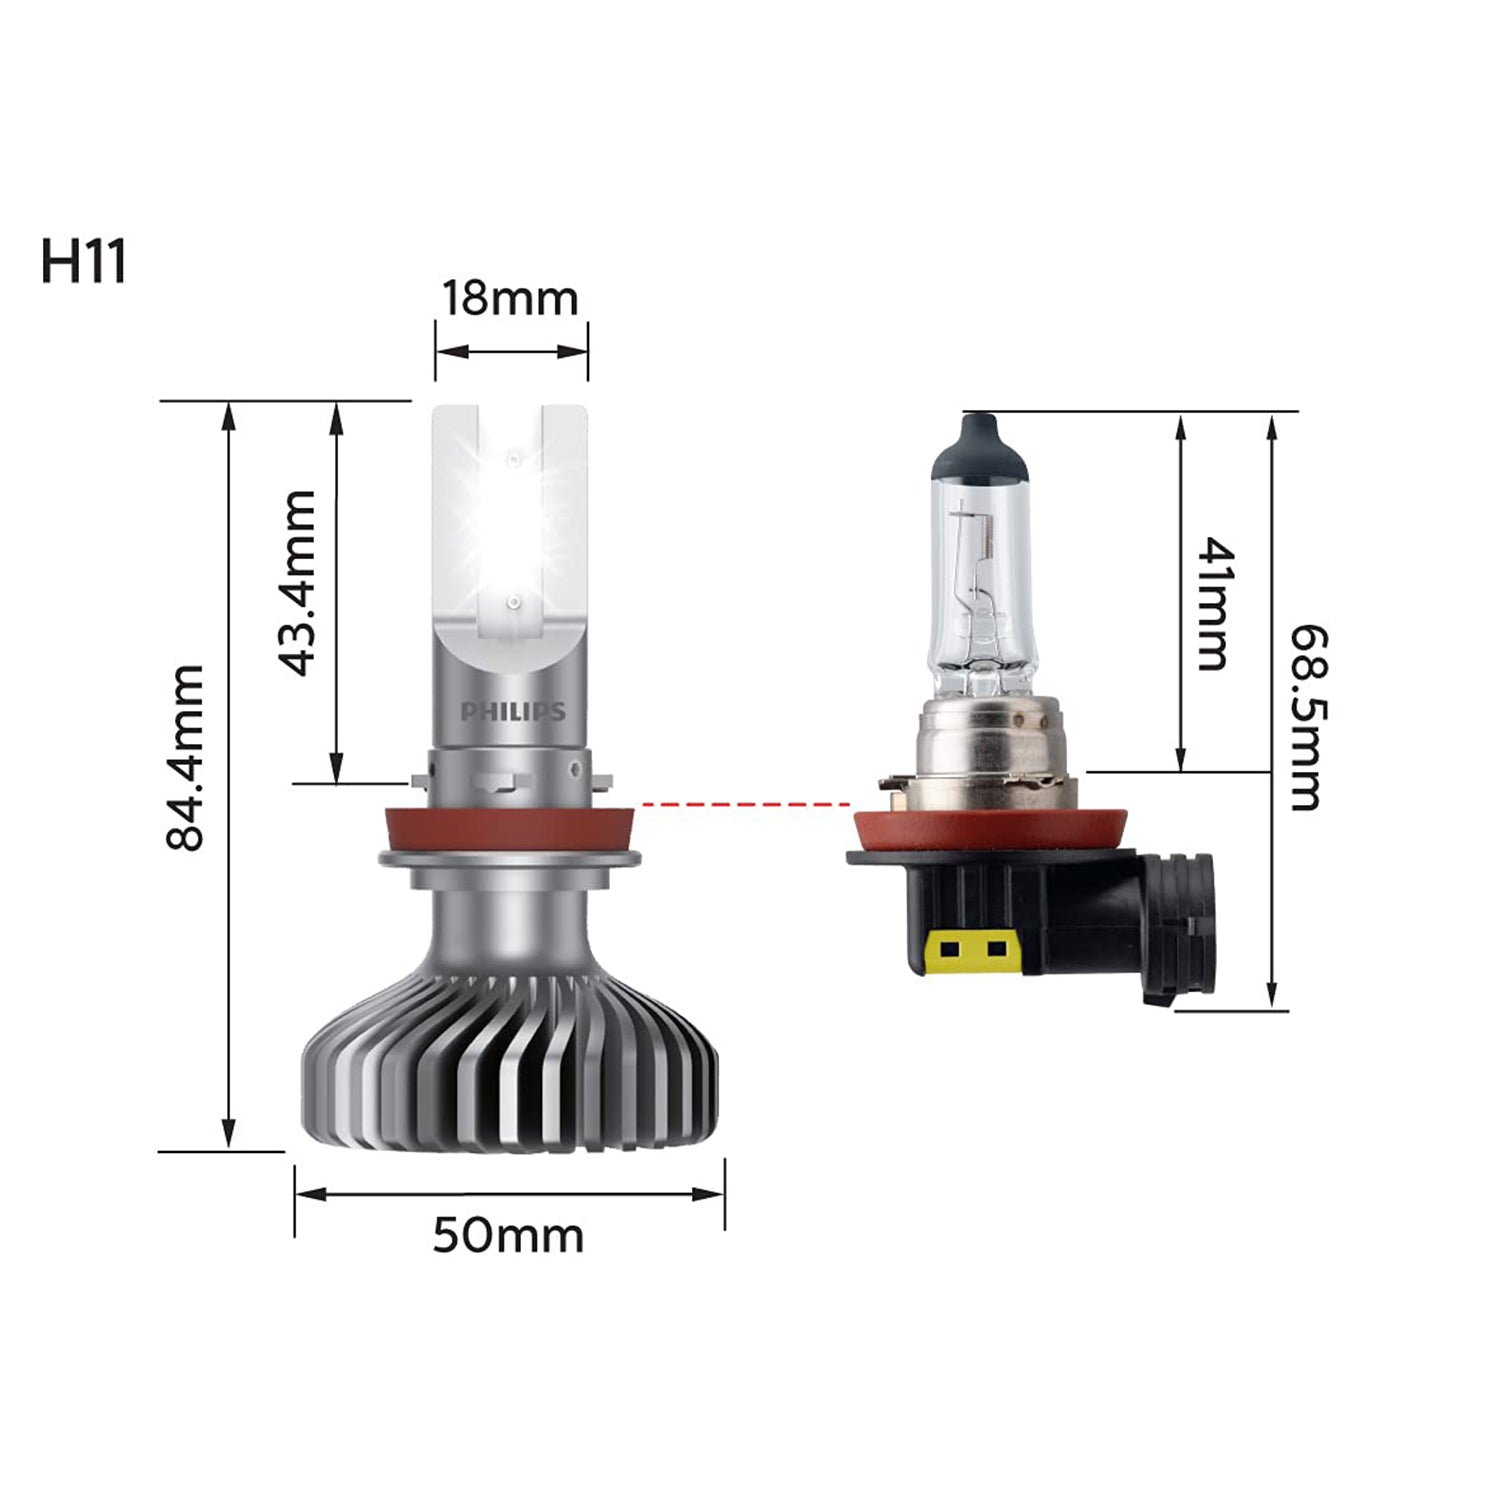 Philips11362XUX2 X-treme Ultinon H11 LED Headlight Bulb (Set of 2)